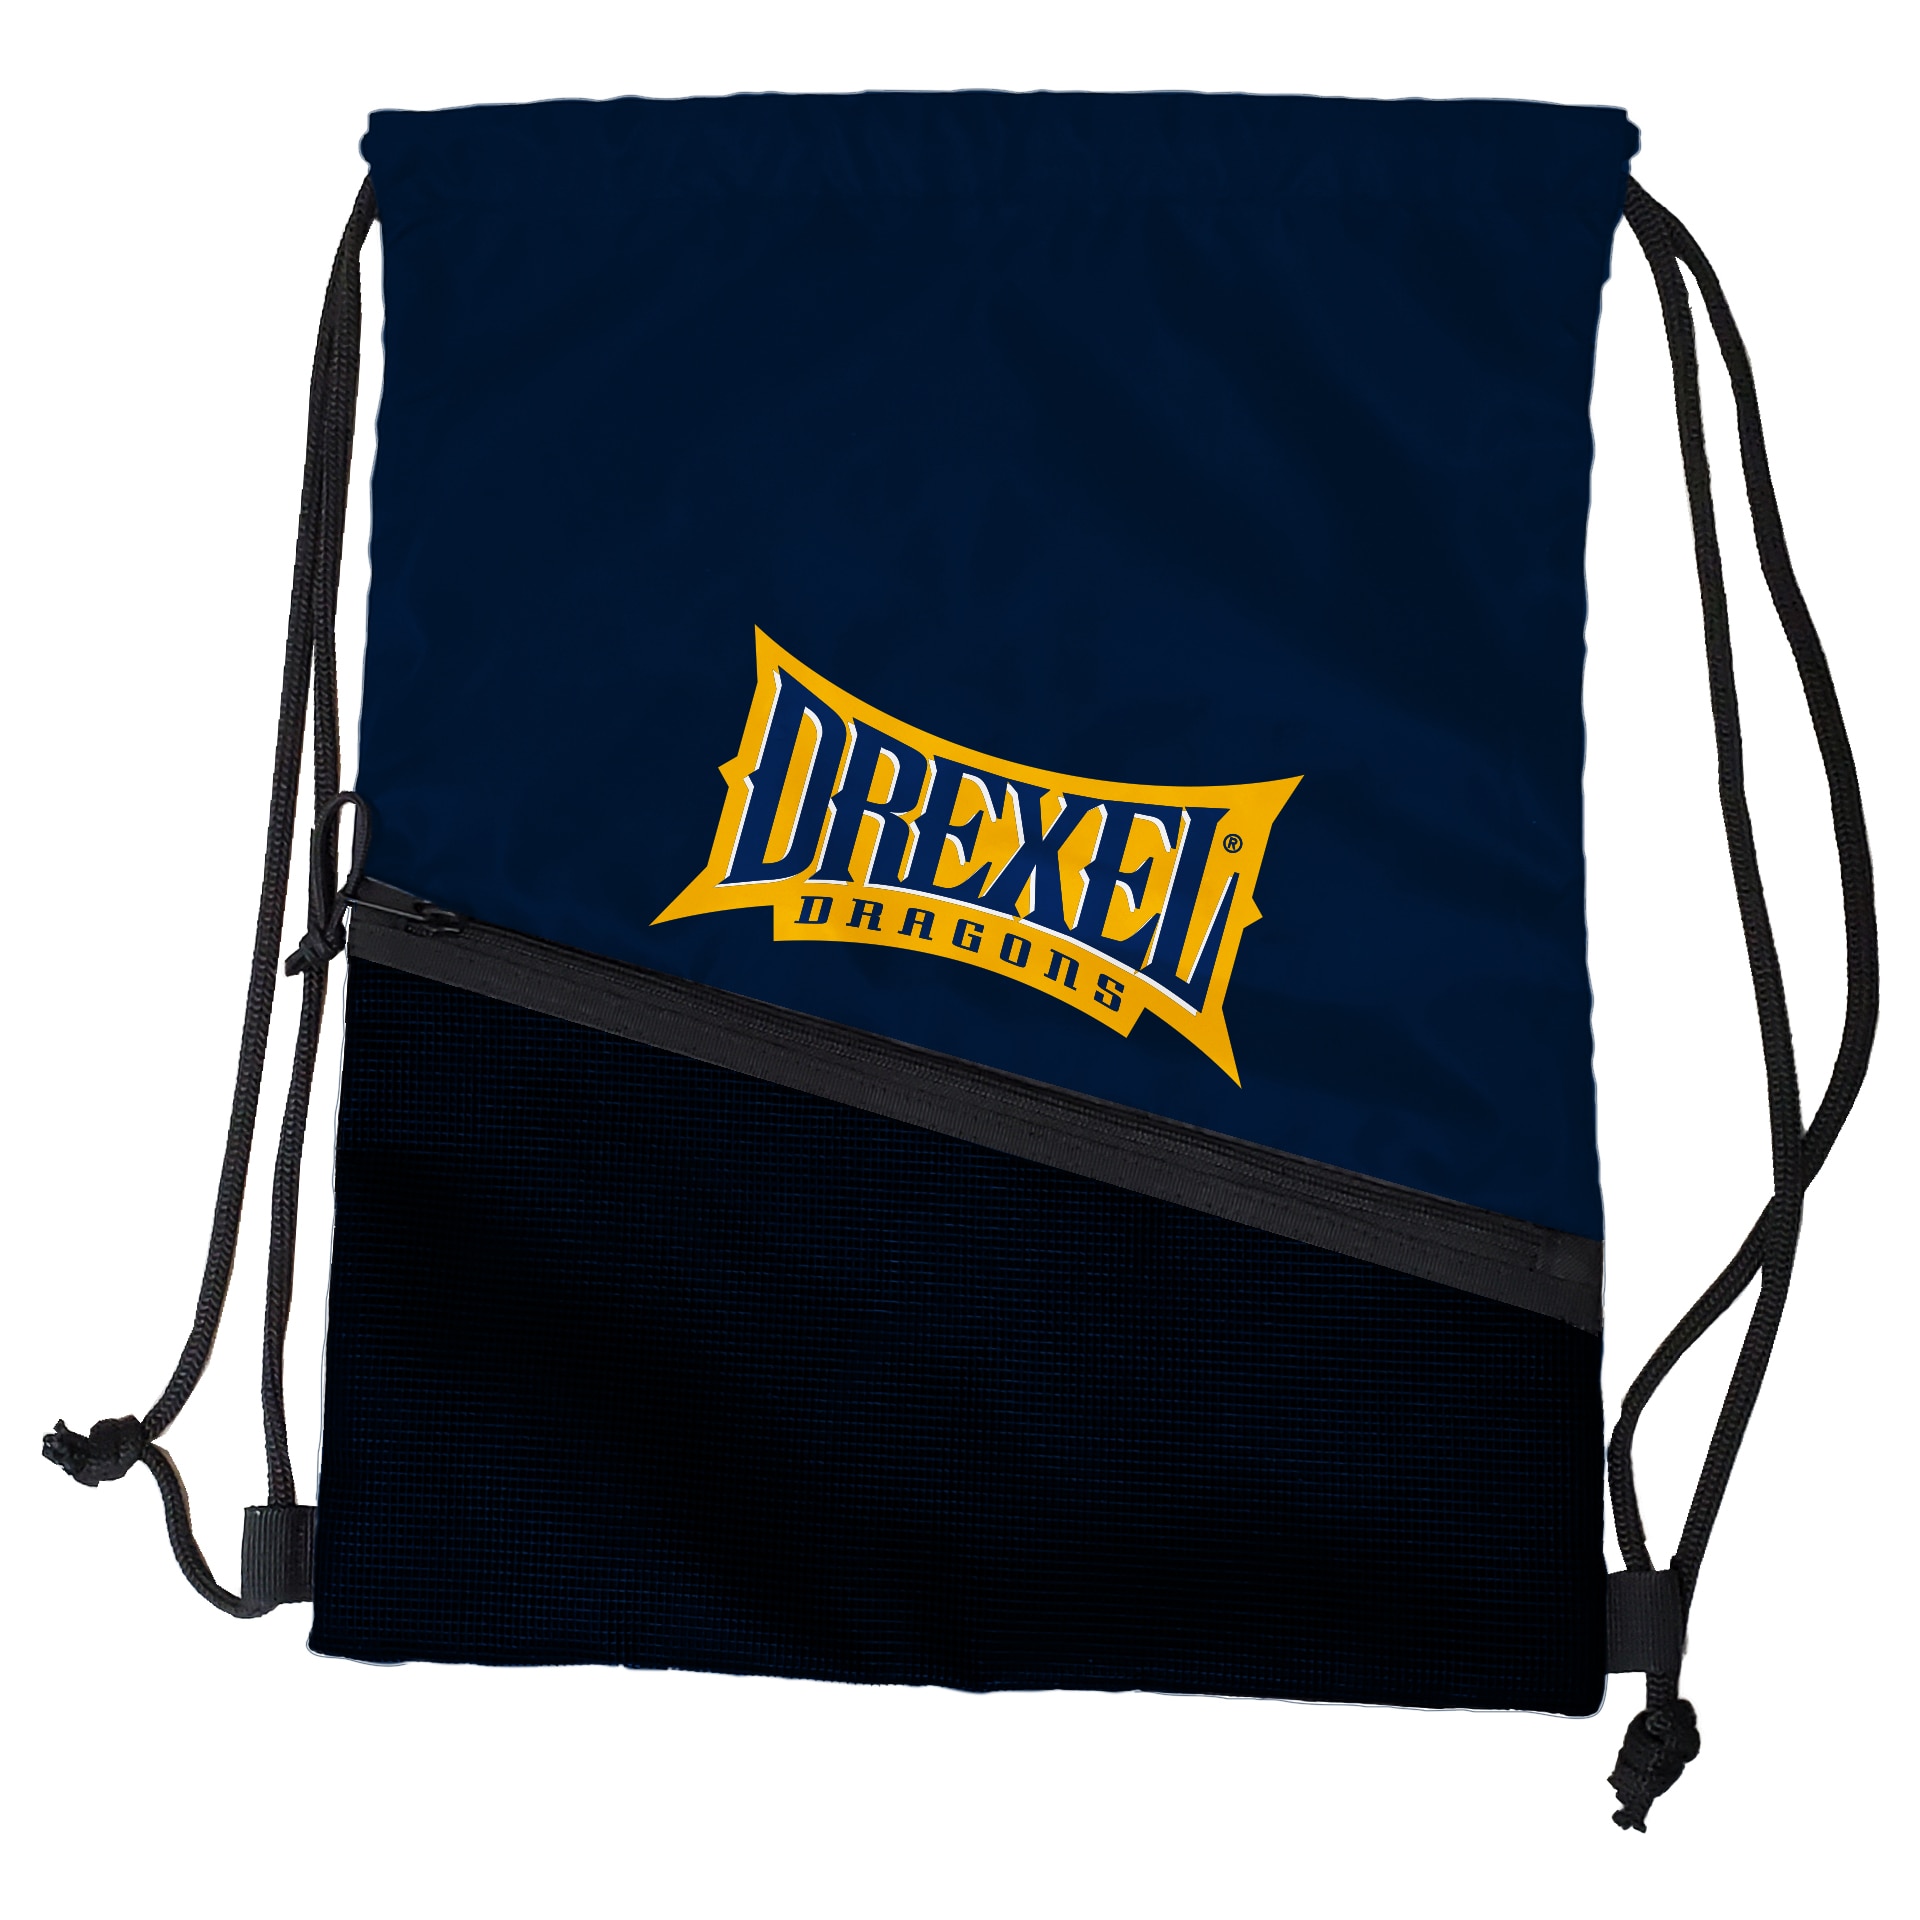 Drexel Dragon 871 Tilt Backsack Backpacks and Bags